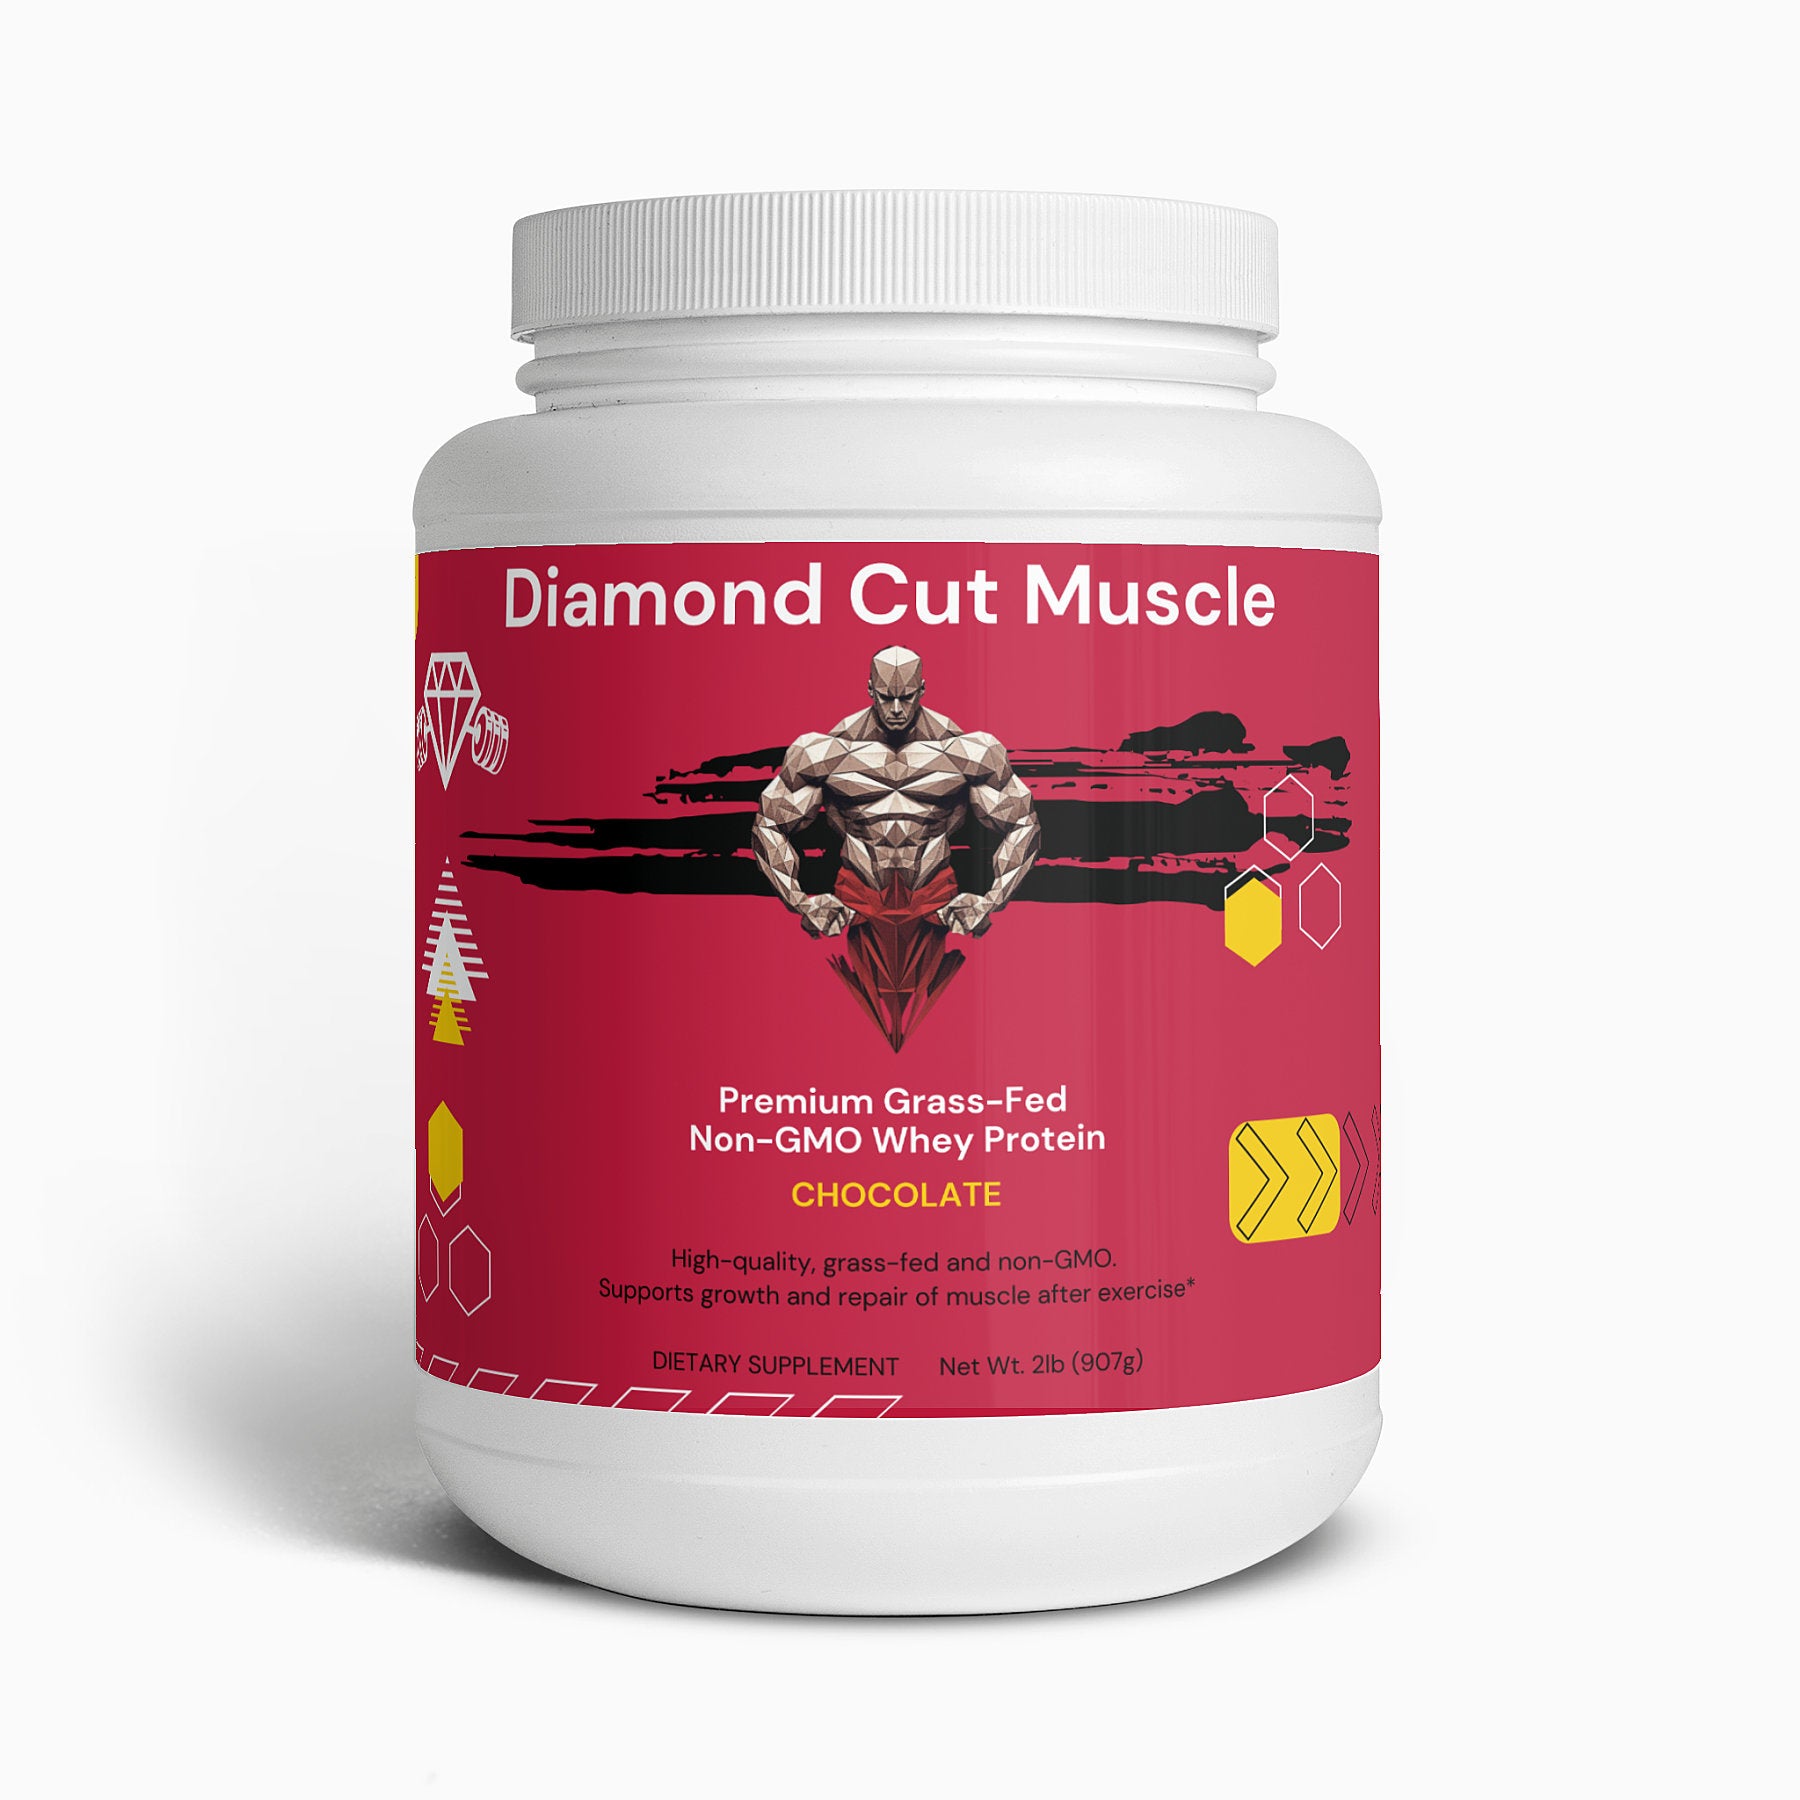 Diamond Cut Muscle's Premium Grass-Fed Non-GMO Whey Protein - Chocolate